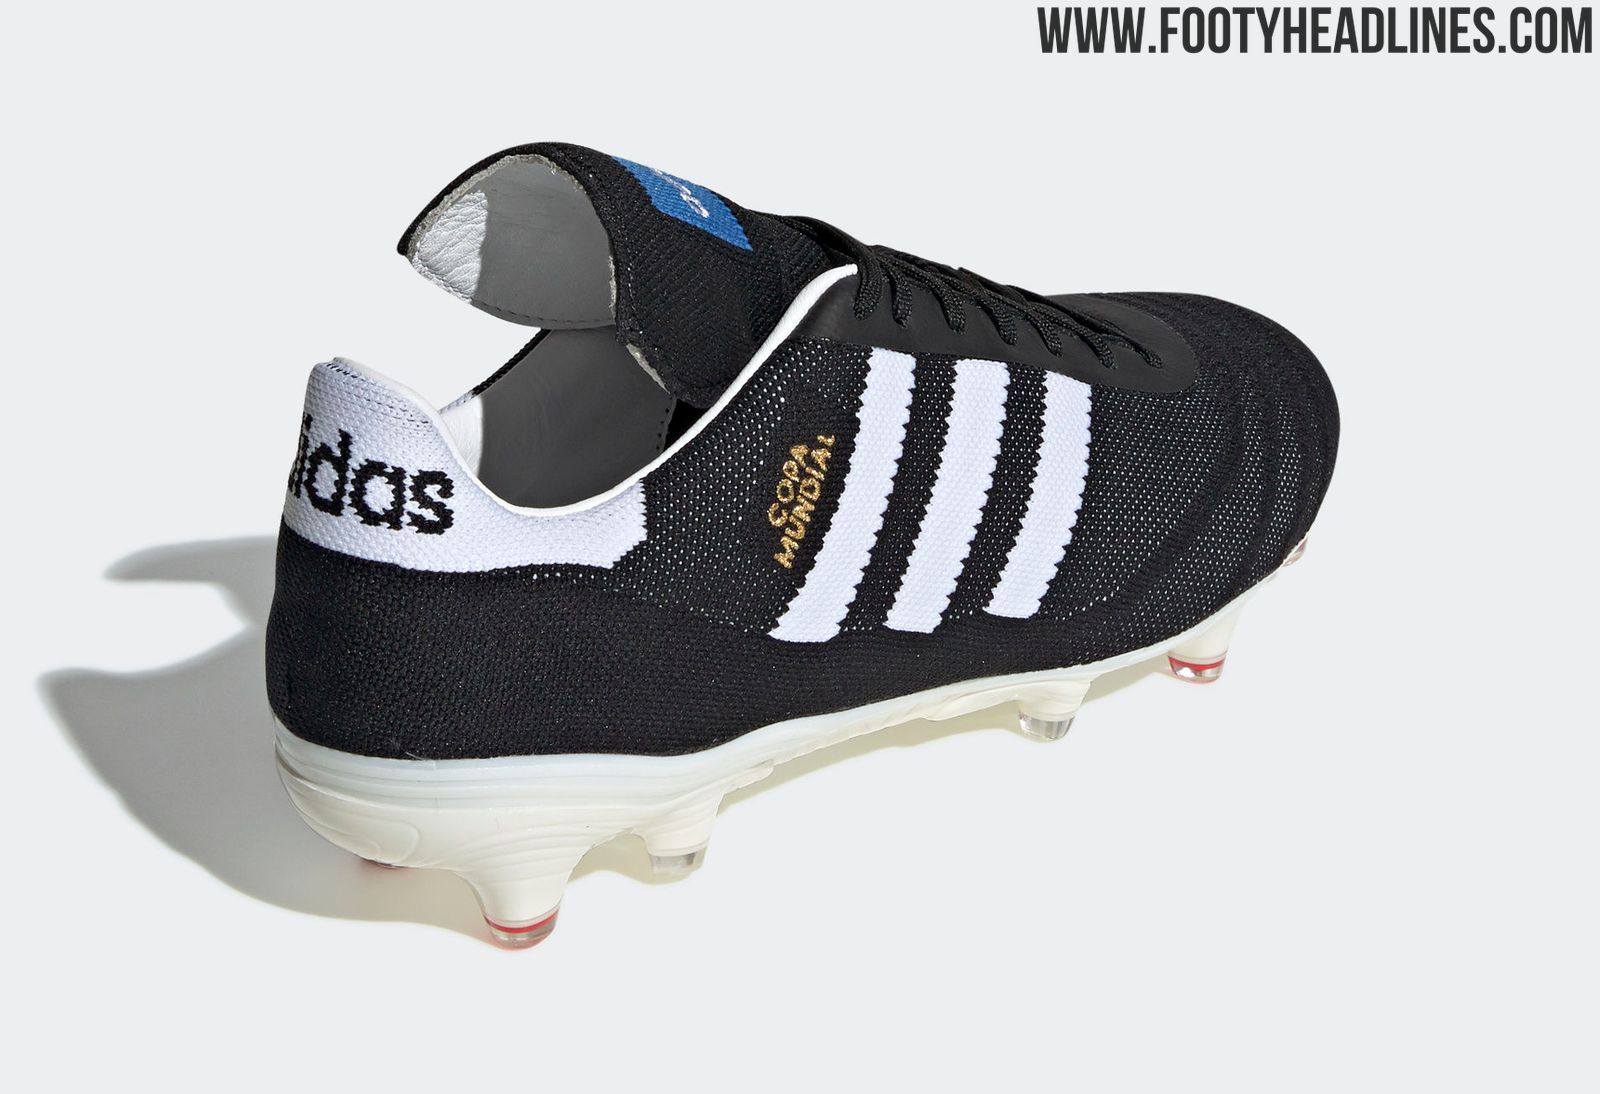 Lo anterior desconocido chorro Limited-Edition Adidas Copa 70 Primeknit Boots Revealed - Dybala Will Wear  Them - Footy Headlines